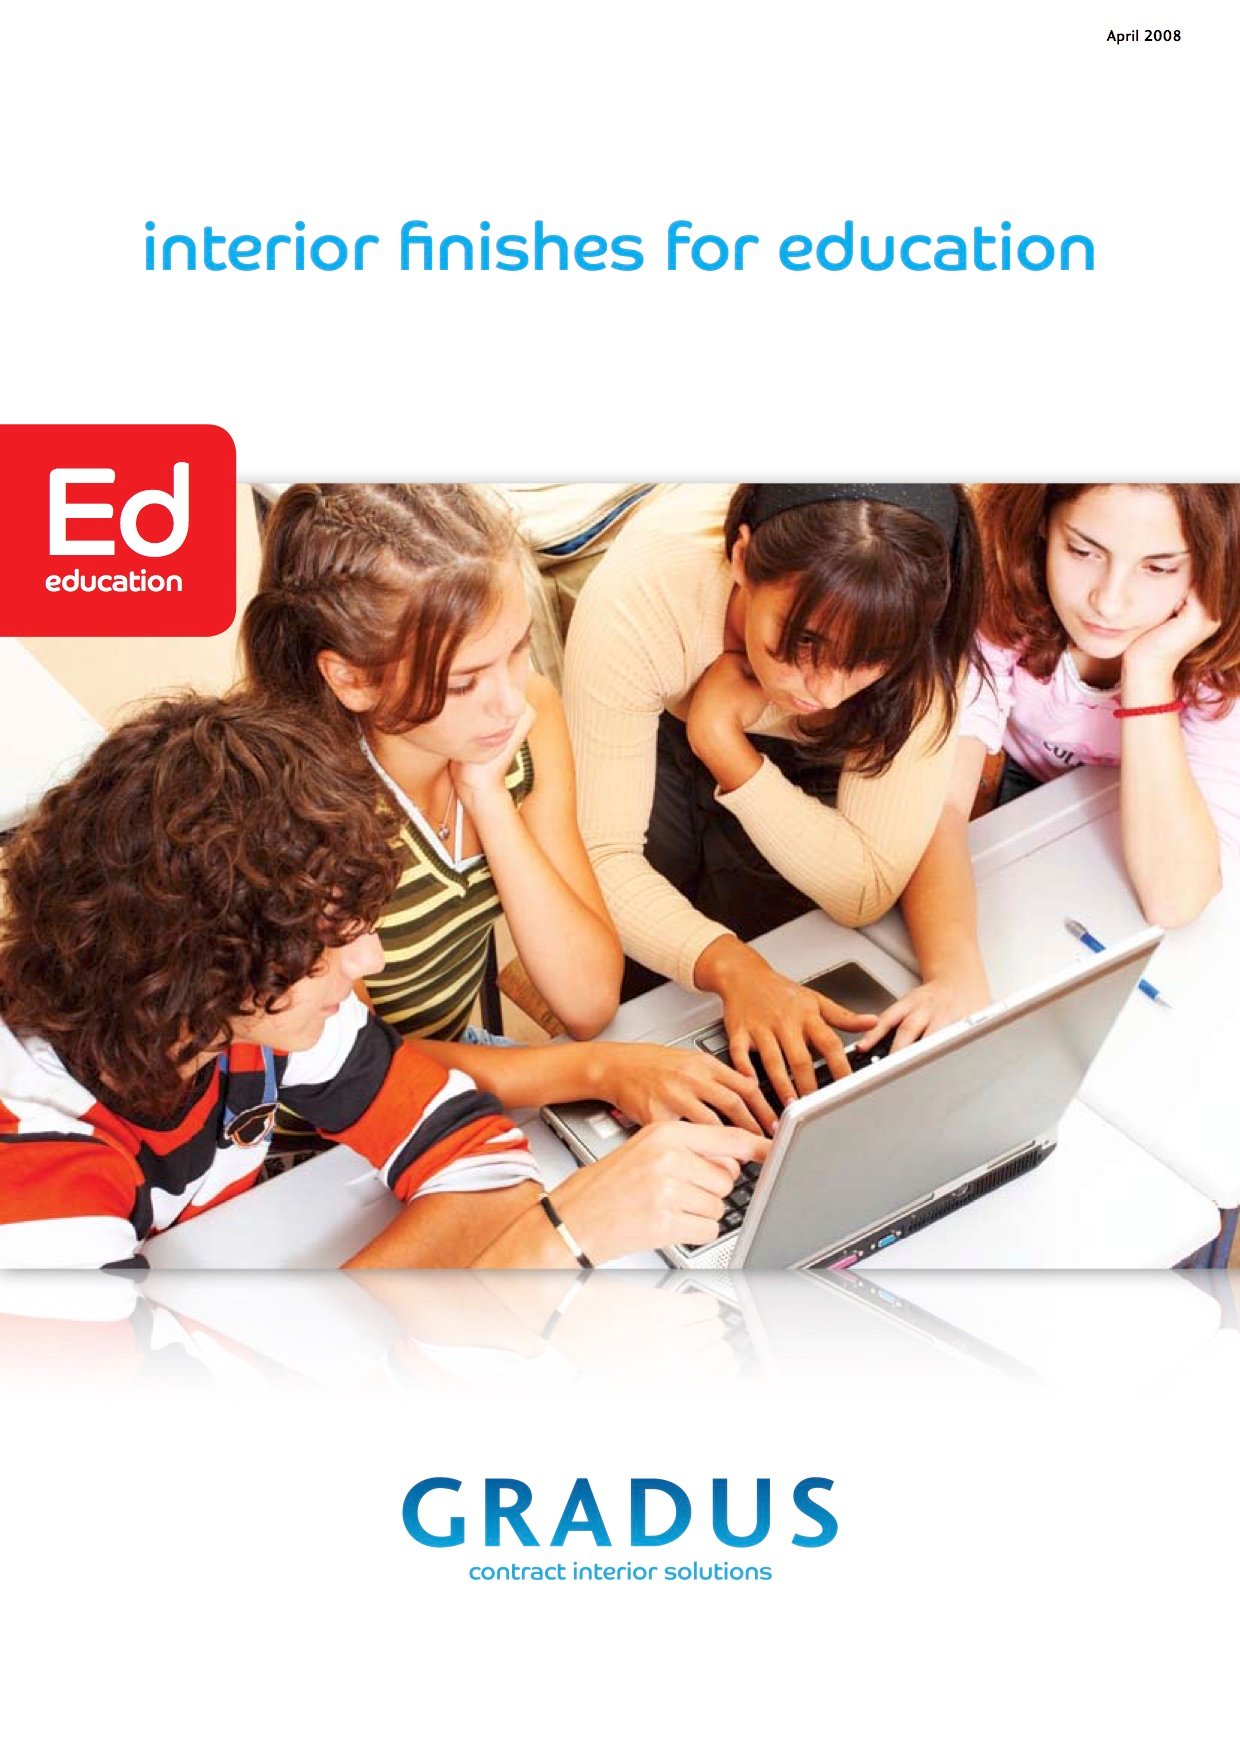 Gradus_interior_finishes_for_education_guide_cover.jpg